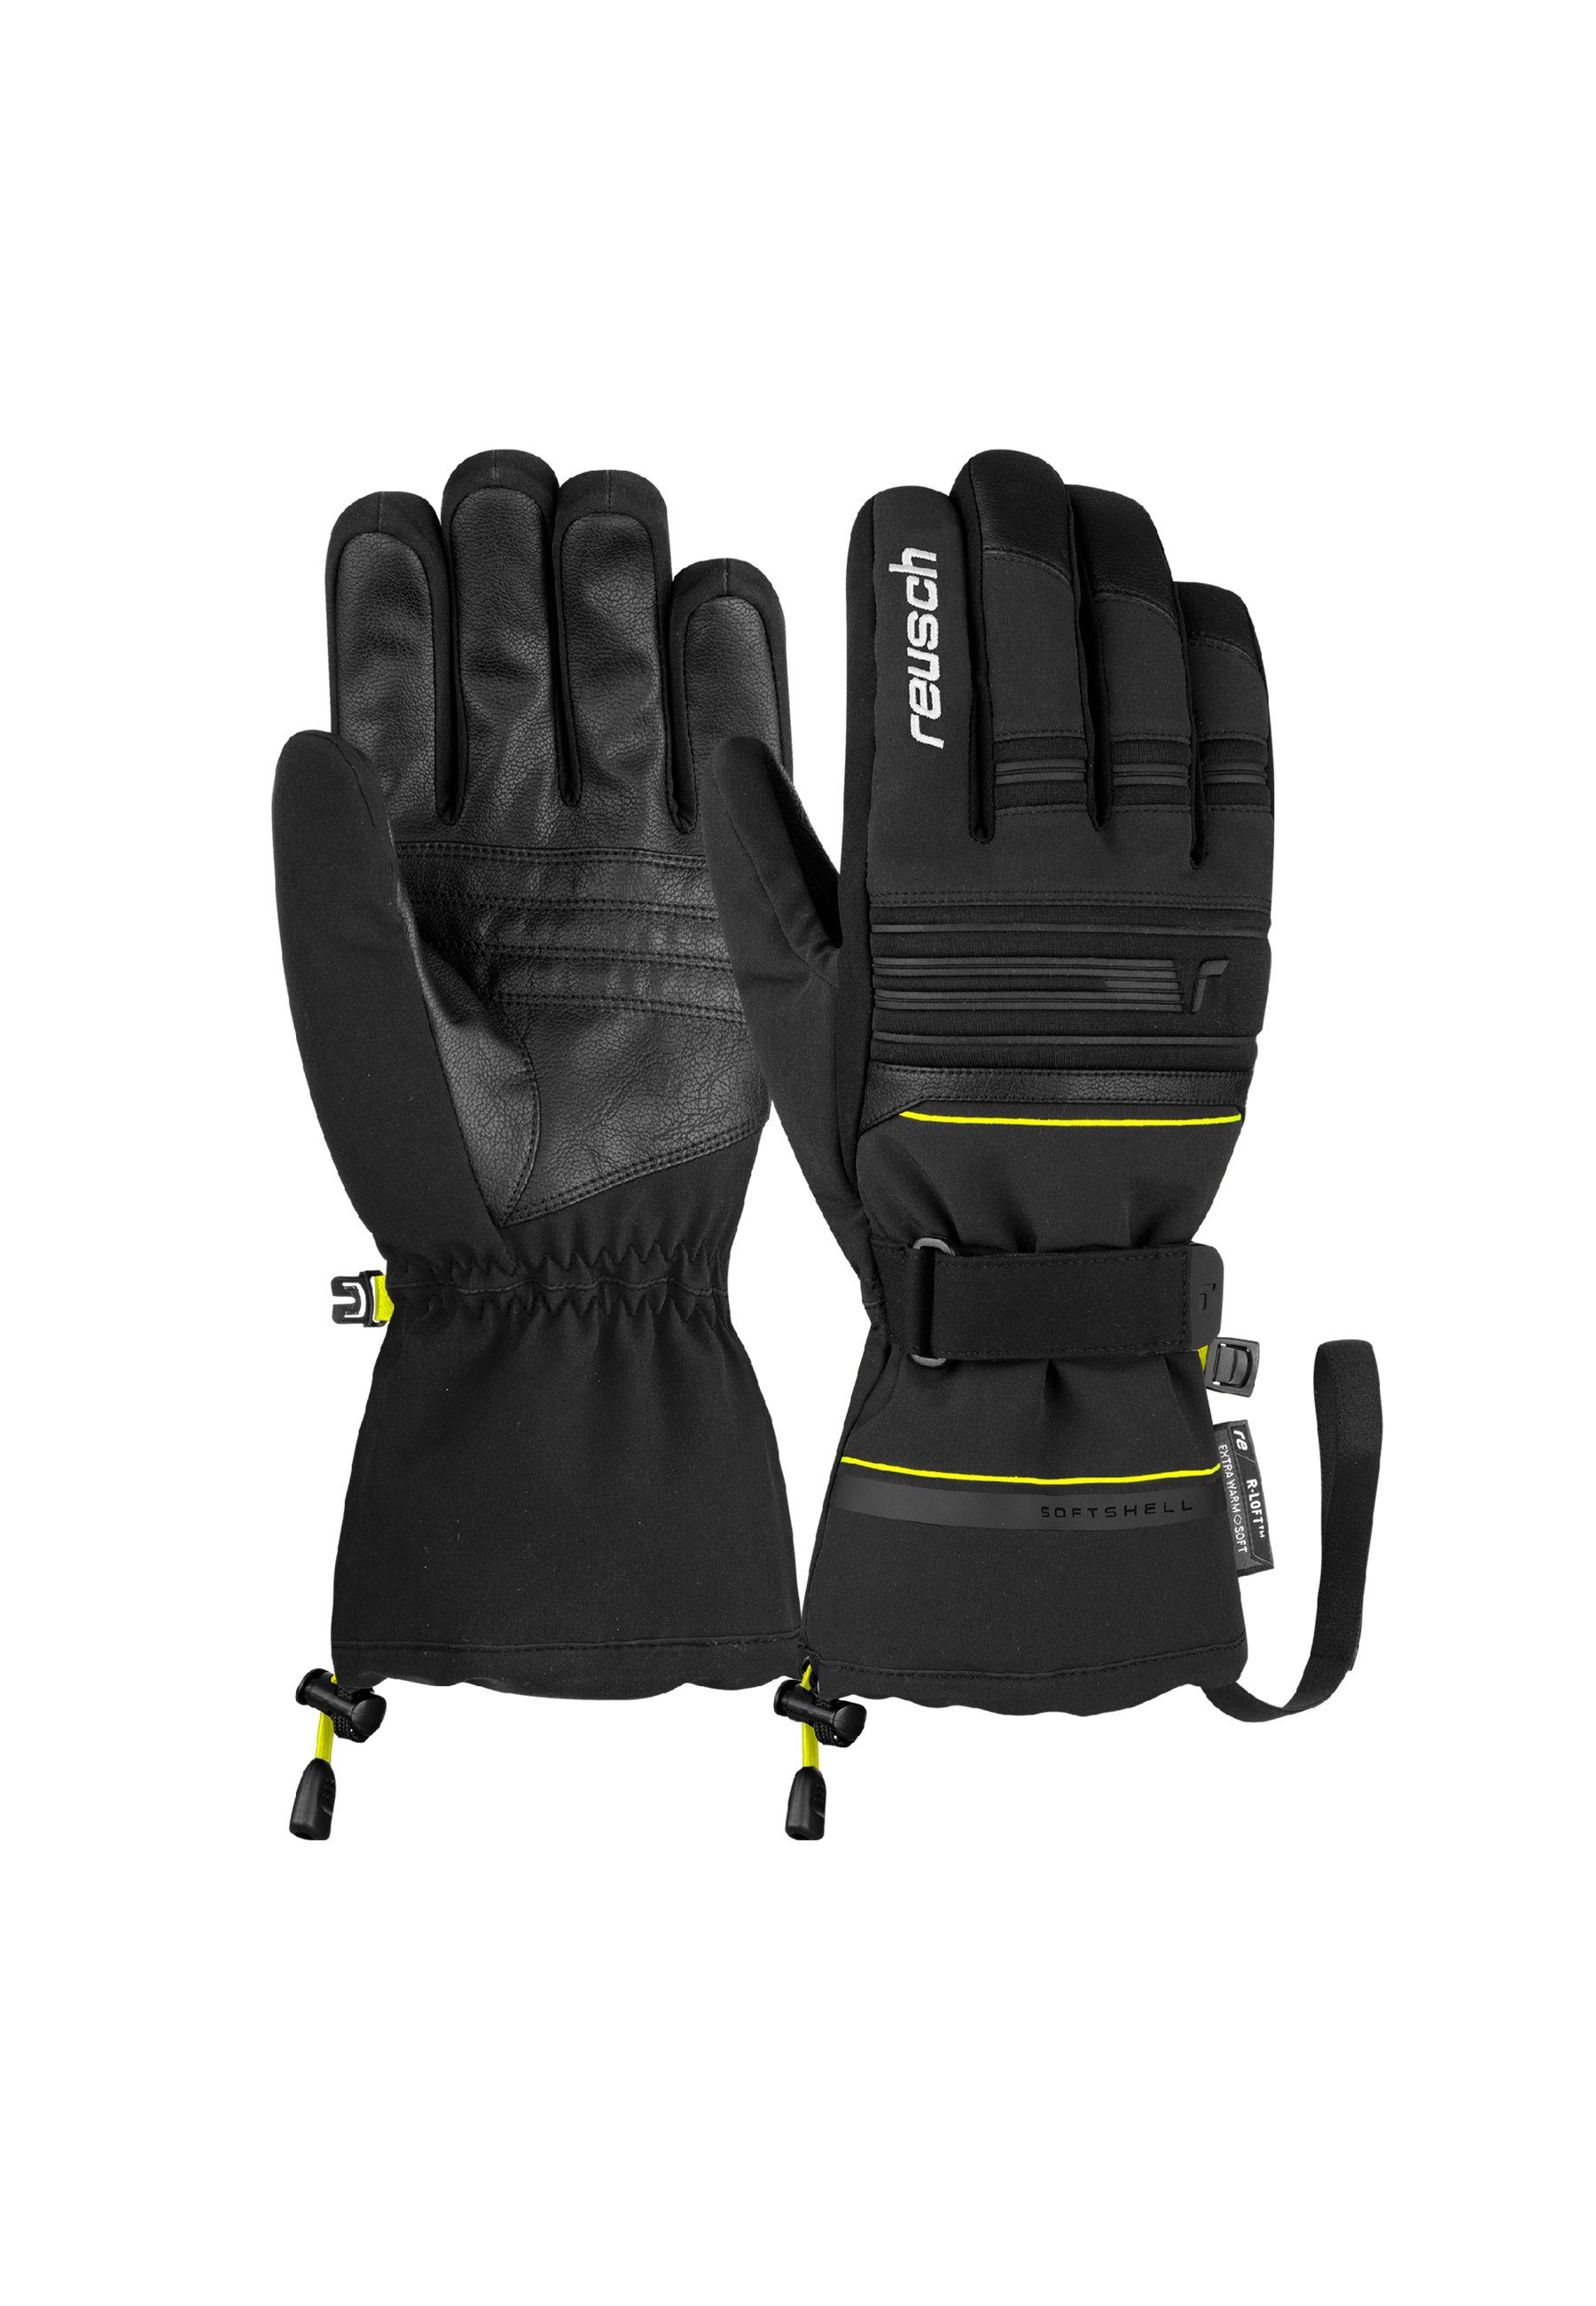 Reusch Skihandschuhe Kondor R-TEX® XT in wasserdichtem und atmungsaktivem Design gelb-schwarz